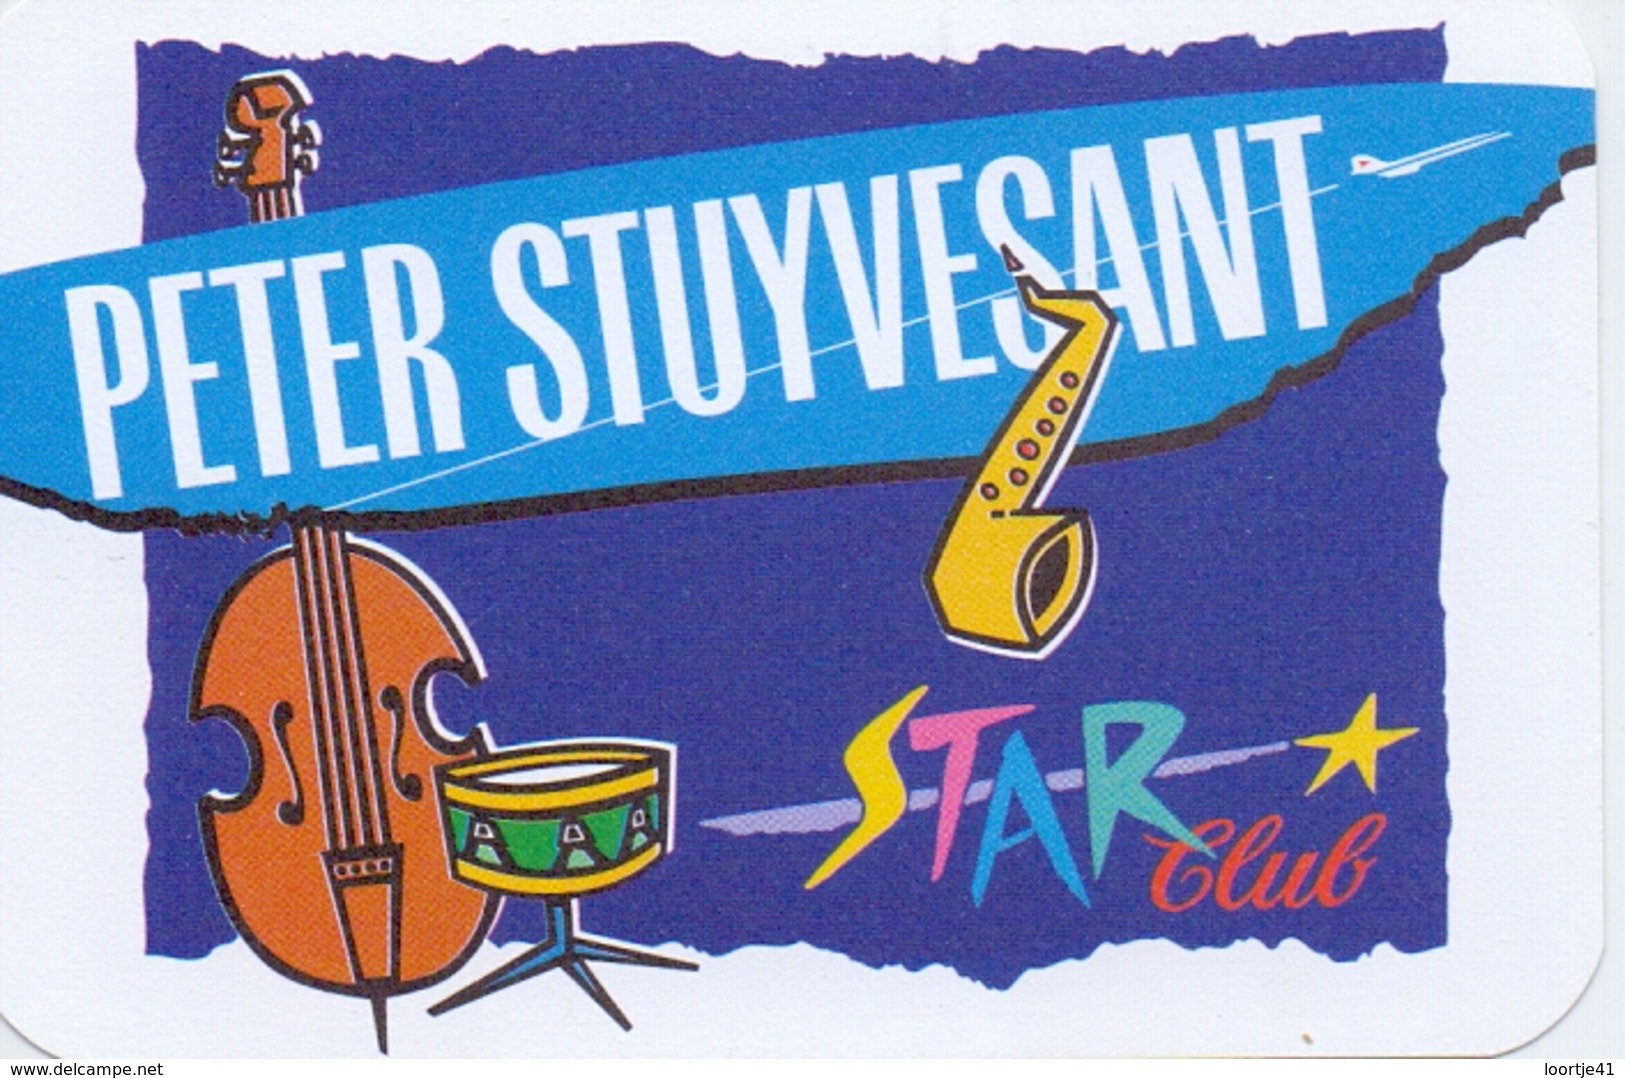 Kalender Calendrier - 1993 - Pub Reclame Sigaretten Peter Stuyvesant - Star Club - Klein Formaat: 1991-00